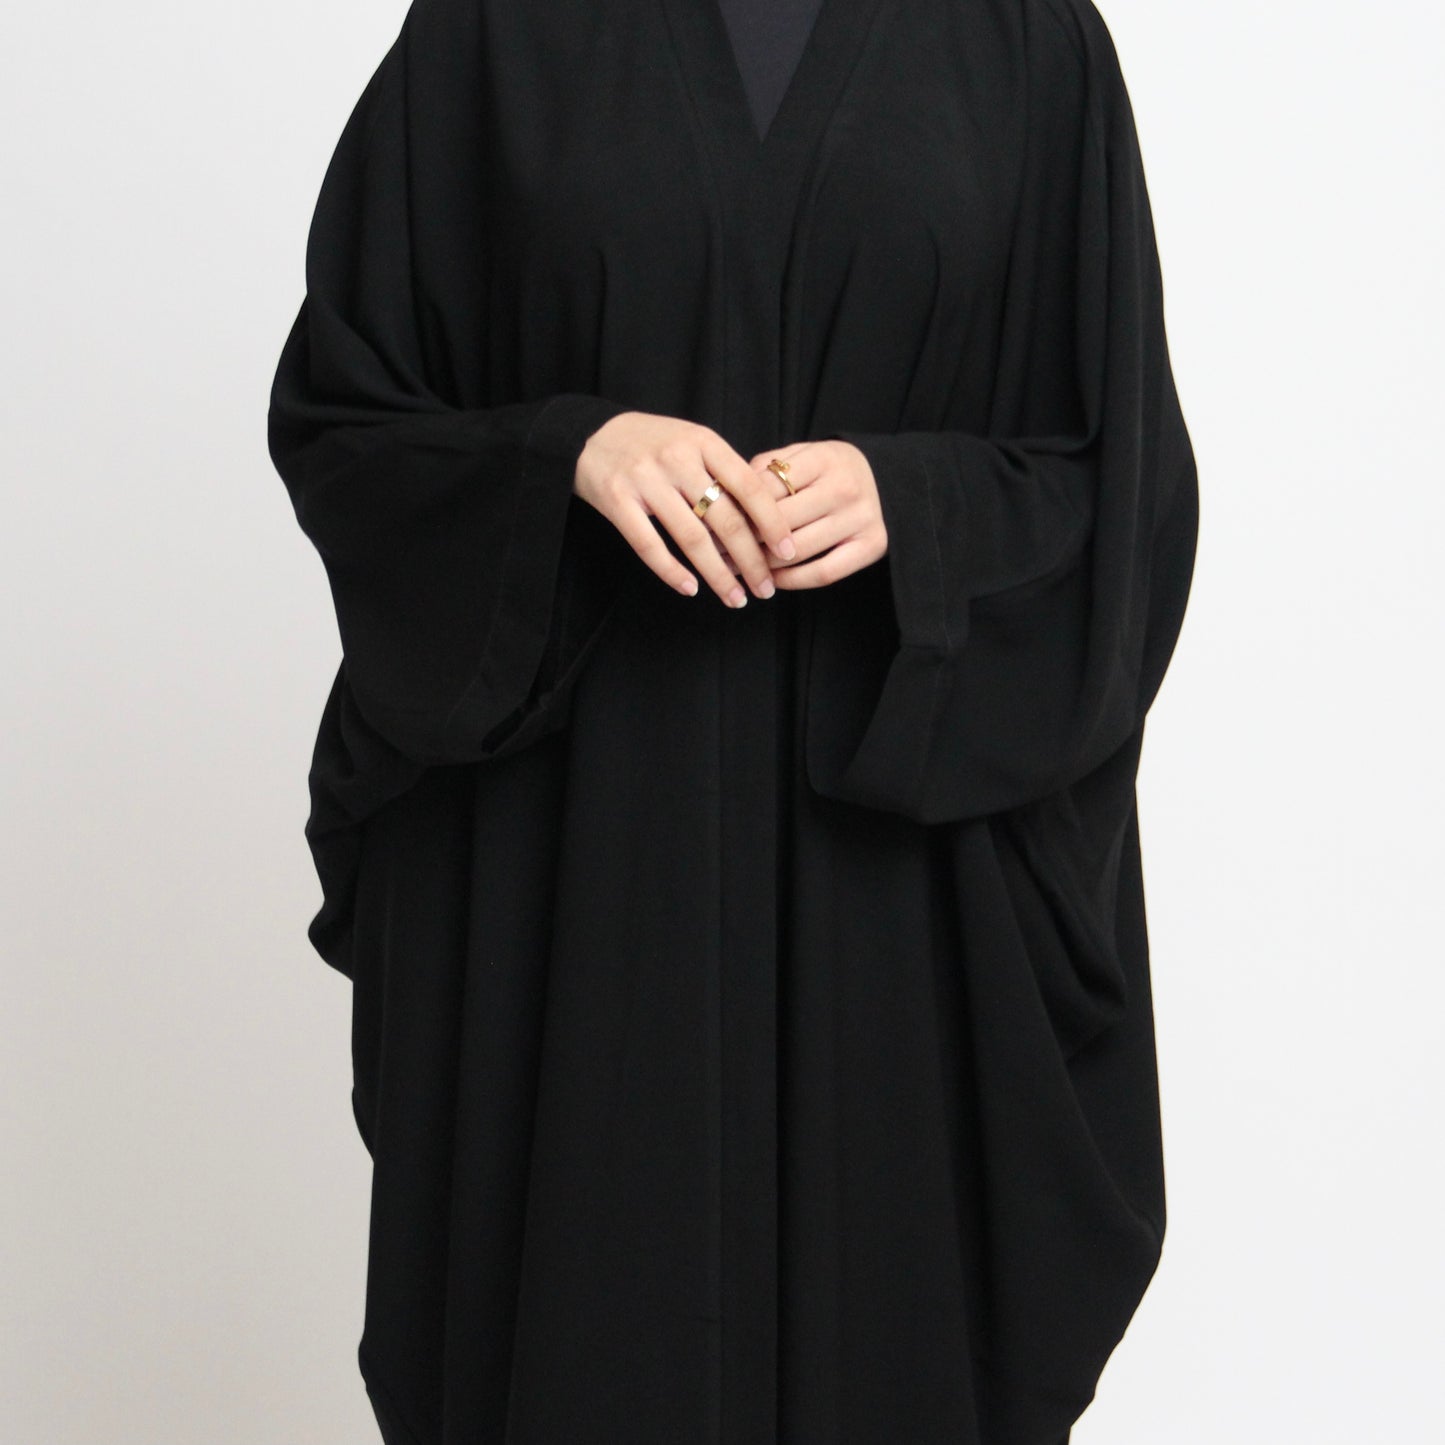 Nahla’s Open Cloak Abaya Black